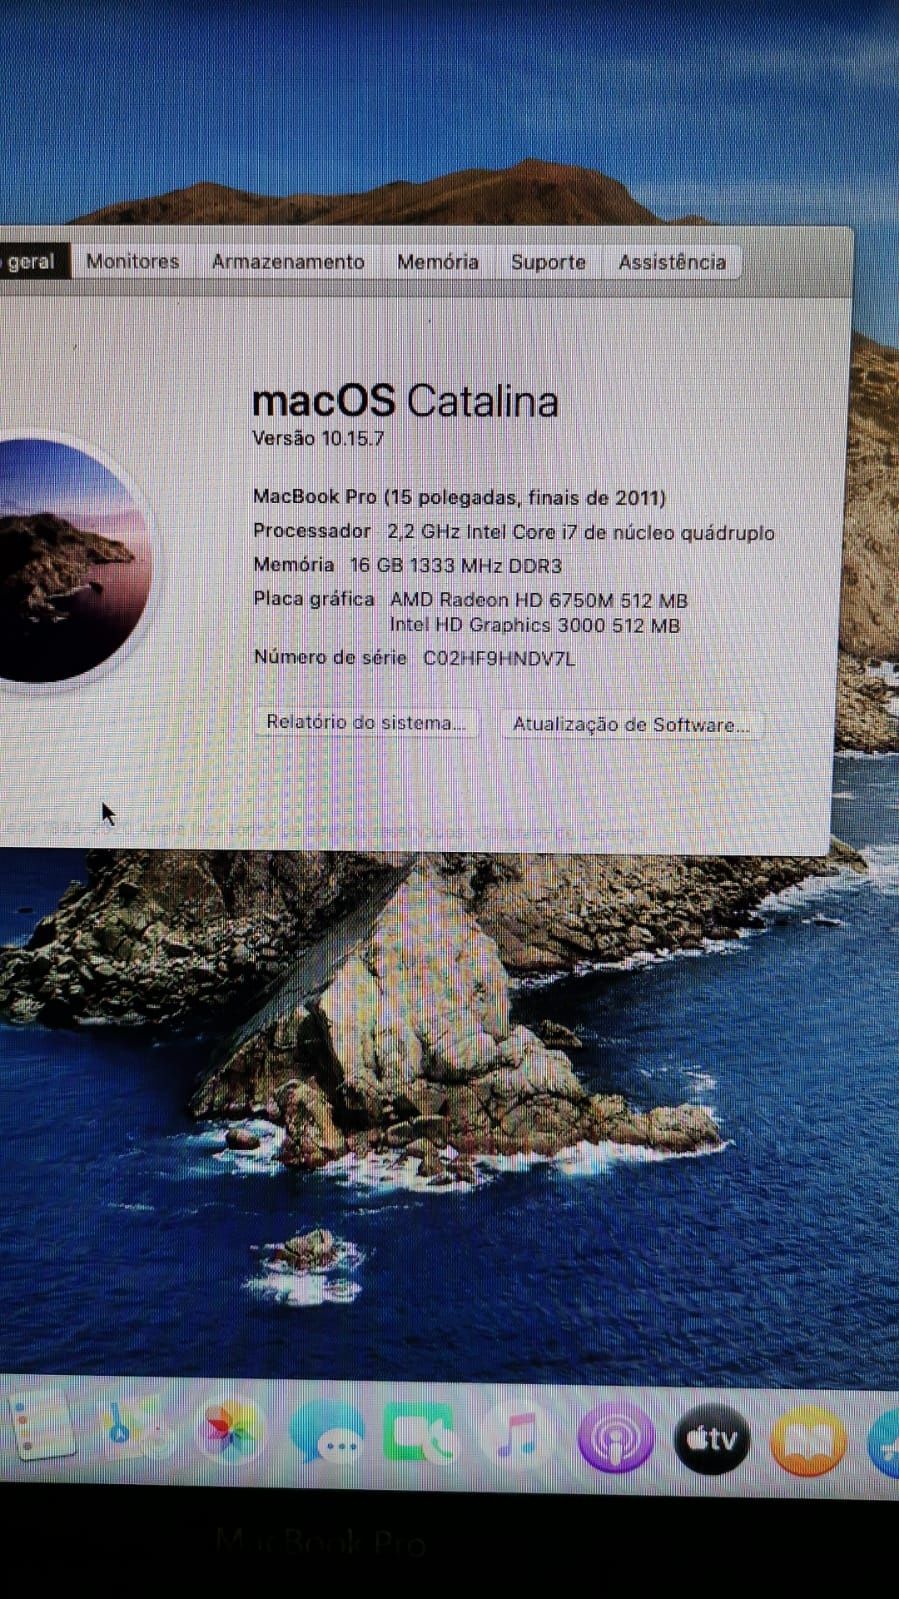 Portatil Apple Macbook pro i7 16gigas ram ssd 1tb super rápido